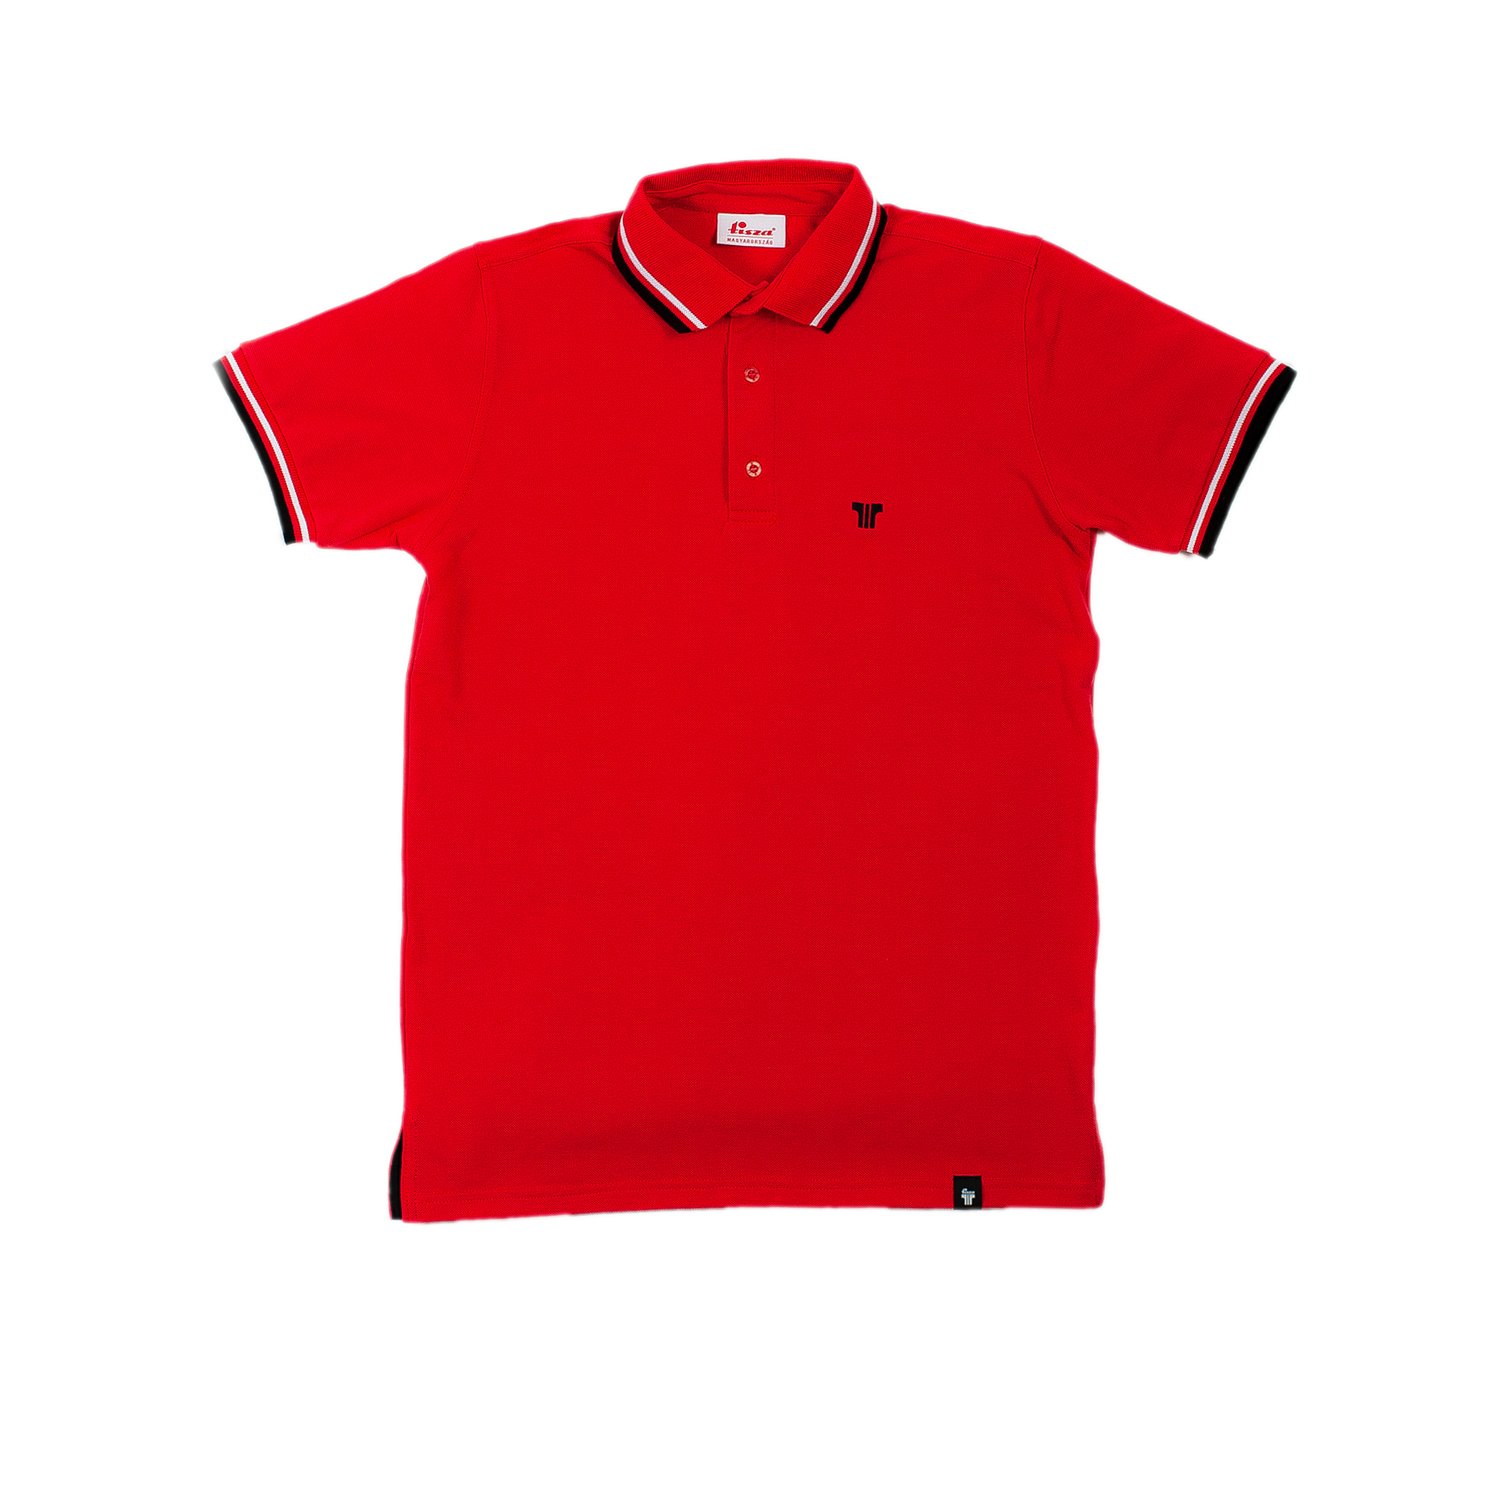 Tisza shoes-Tennis shirt-Red-black